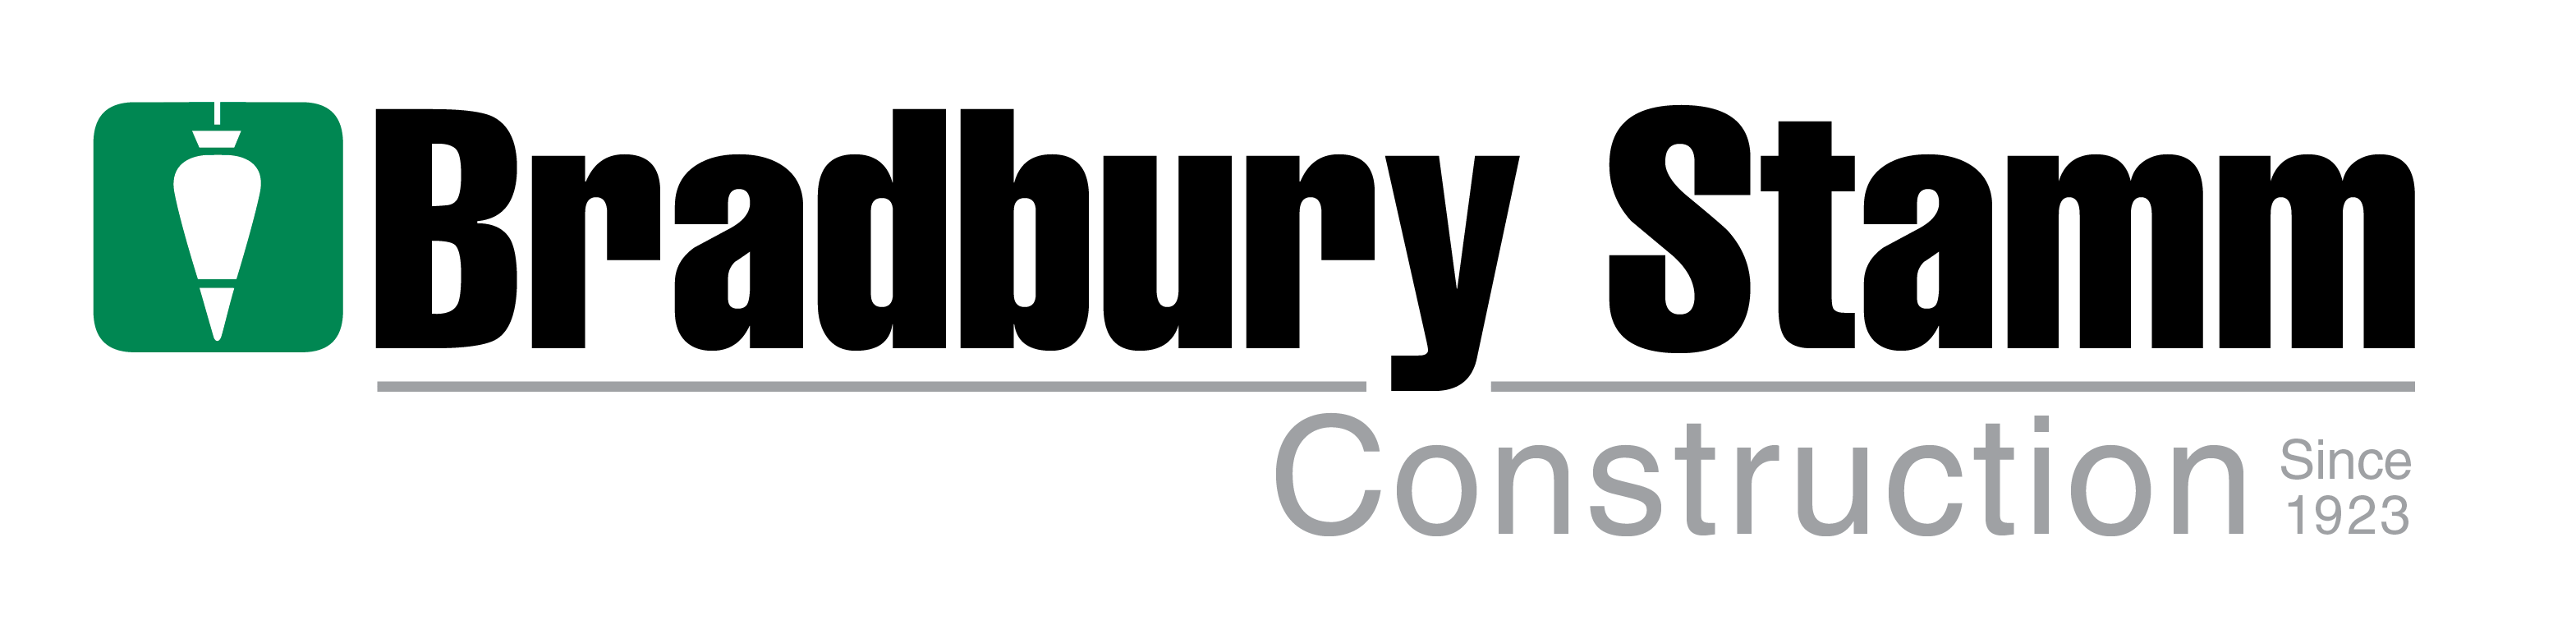 Bradbury Stamm Construction Company Logo